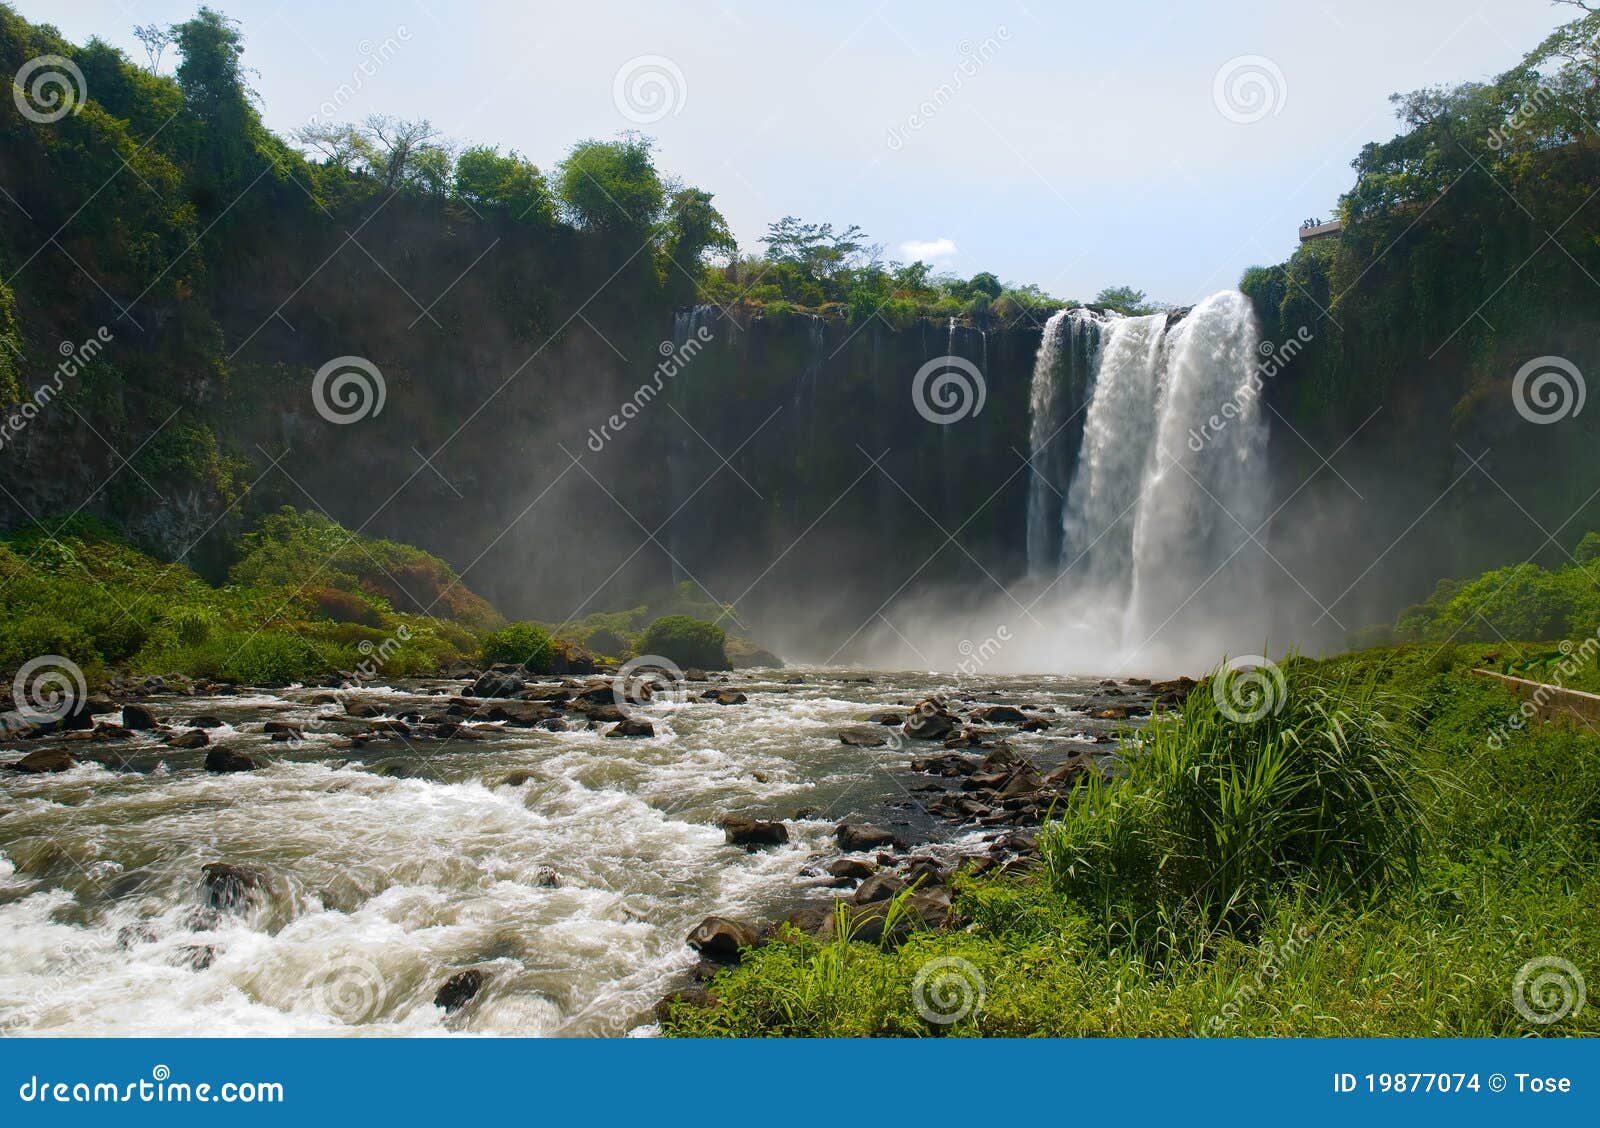 catemaco waterfall, veracruz, mexico